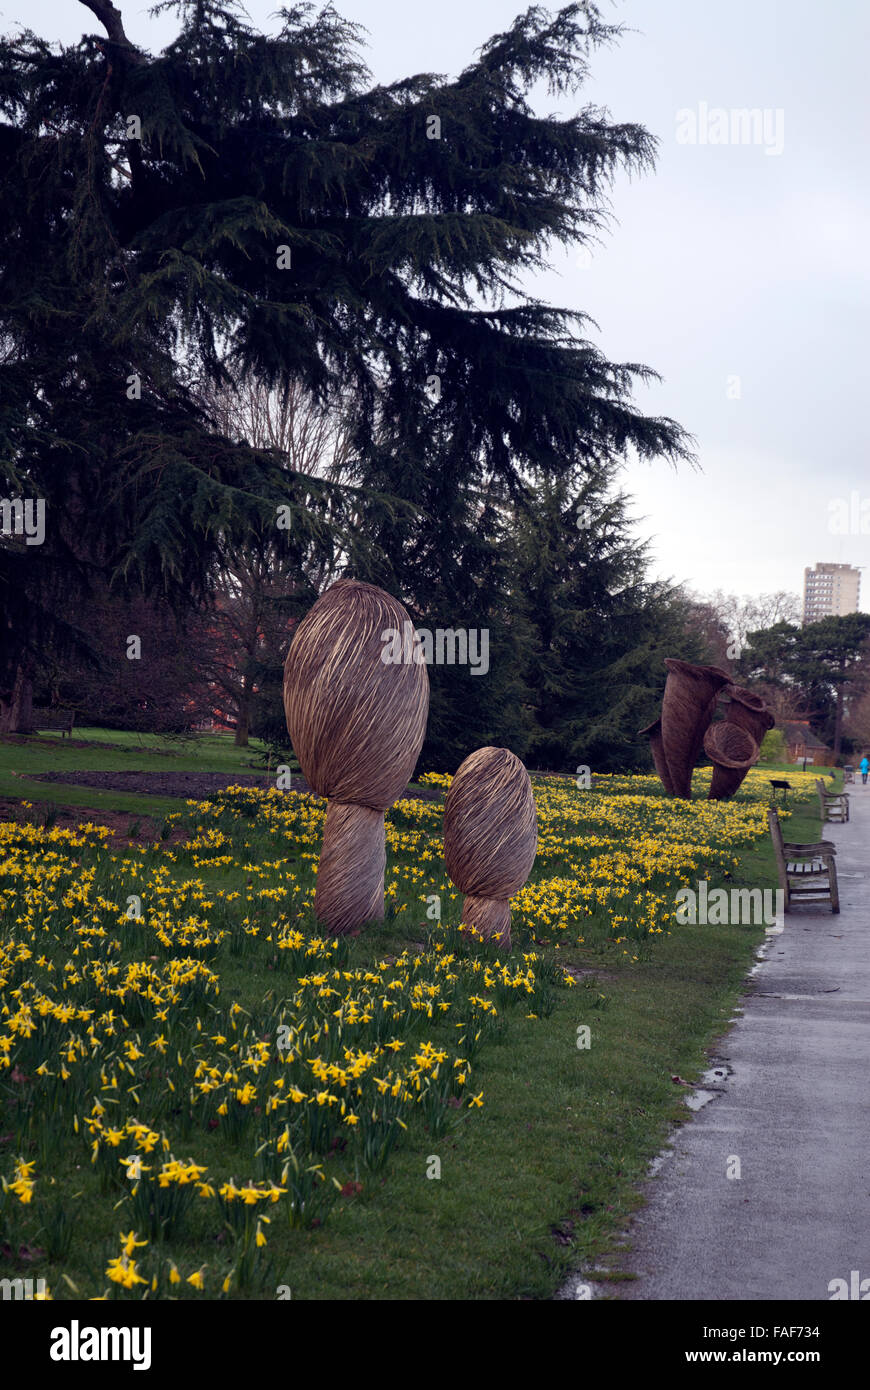 Wicker funghi sculptures Kew Gardens London England UK Stock Photo